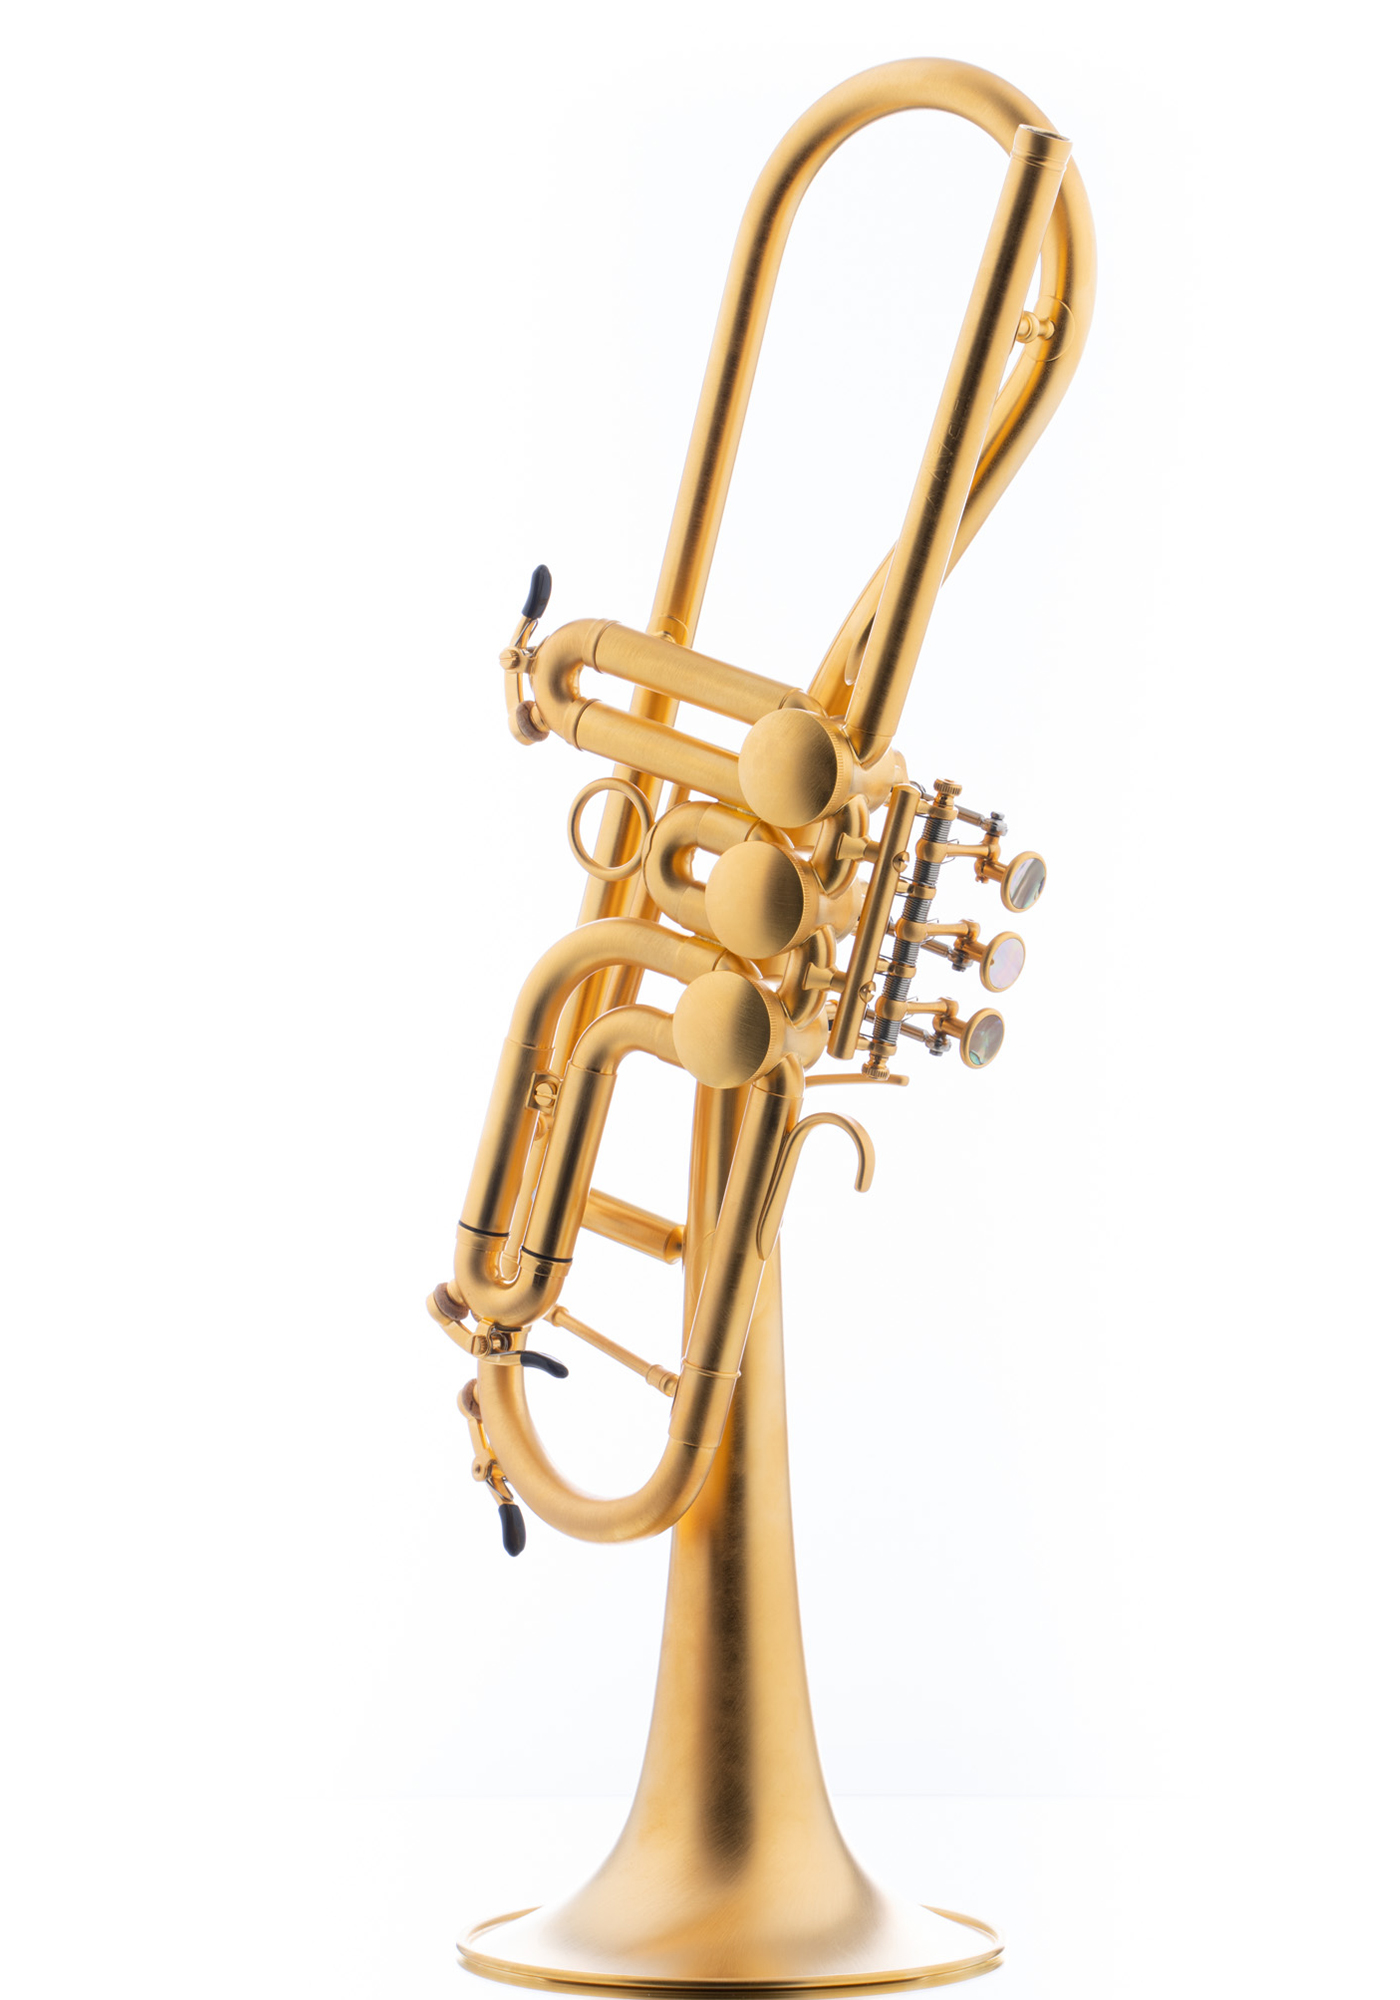 Schagerl B-Trompete "GANSCHHORN" heavy scratched gold